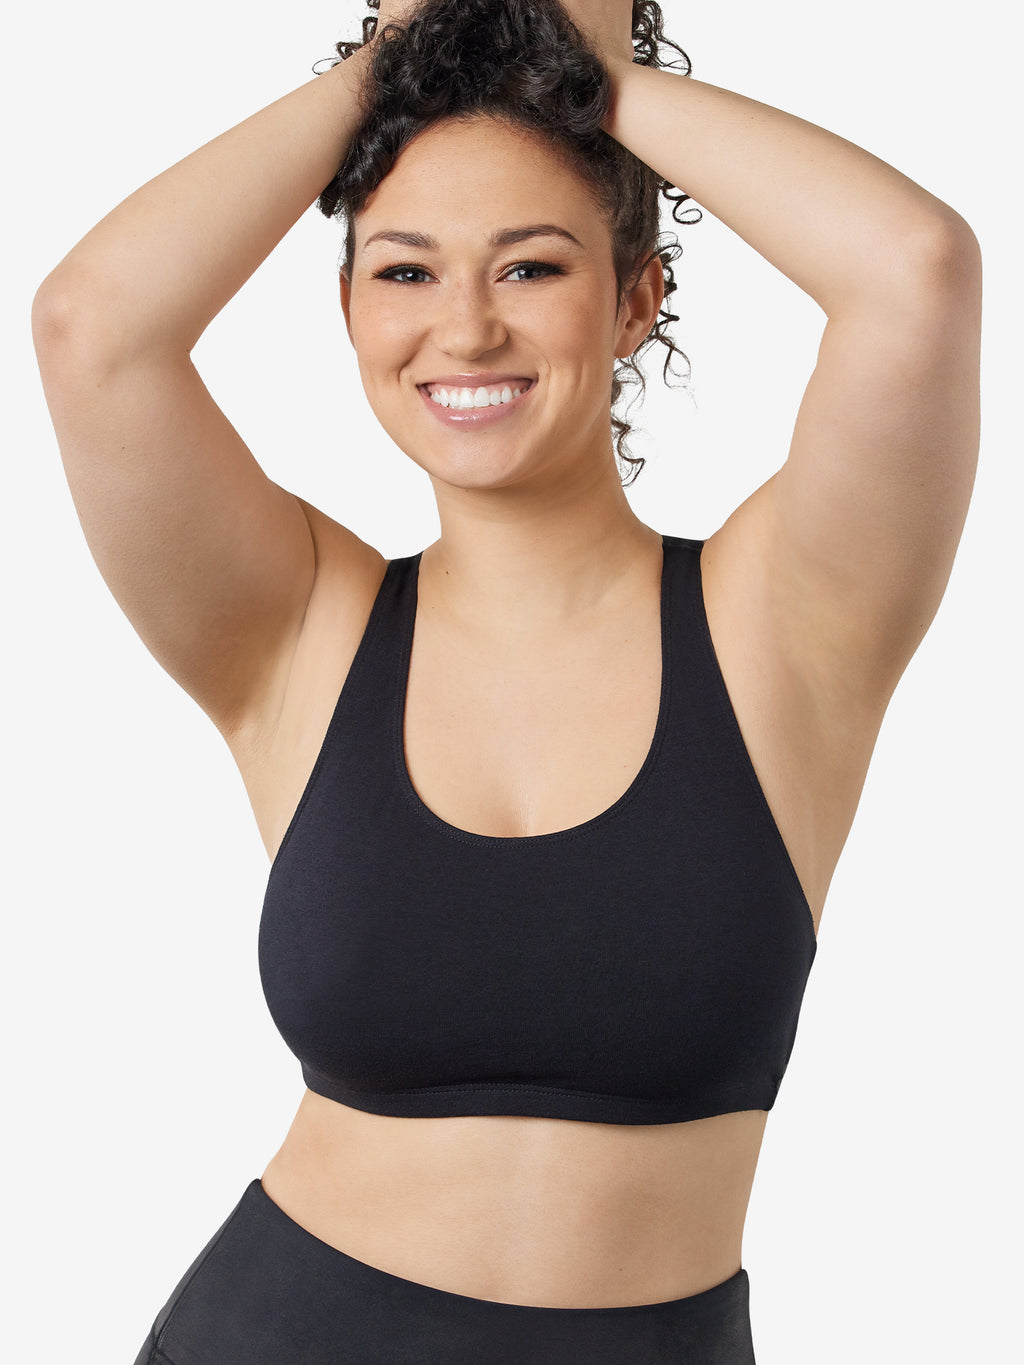 Buy Leneko Sports Bras for Women, Workout Bras for Women, Medium